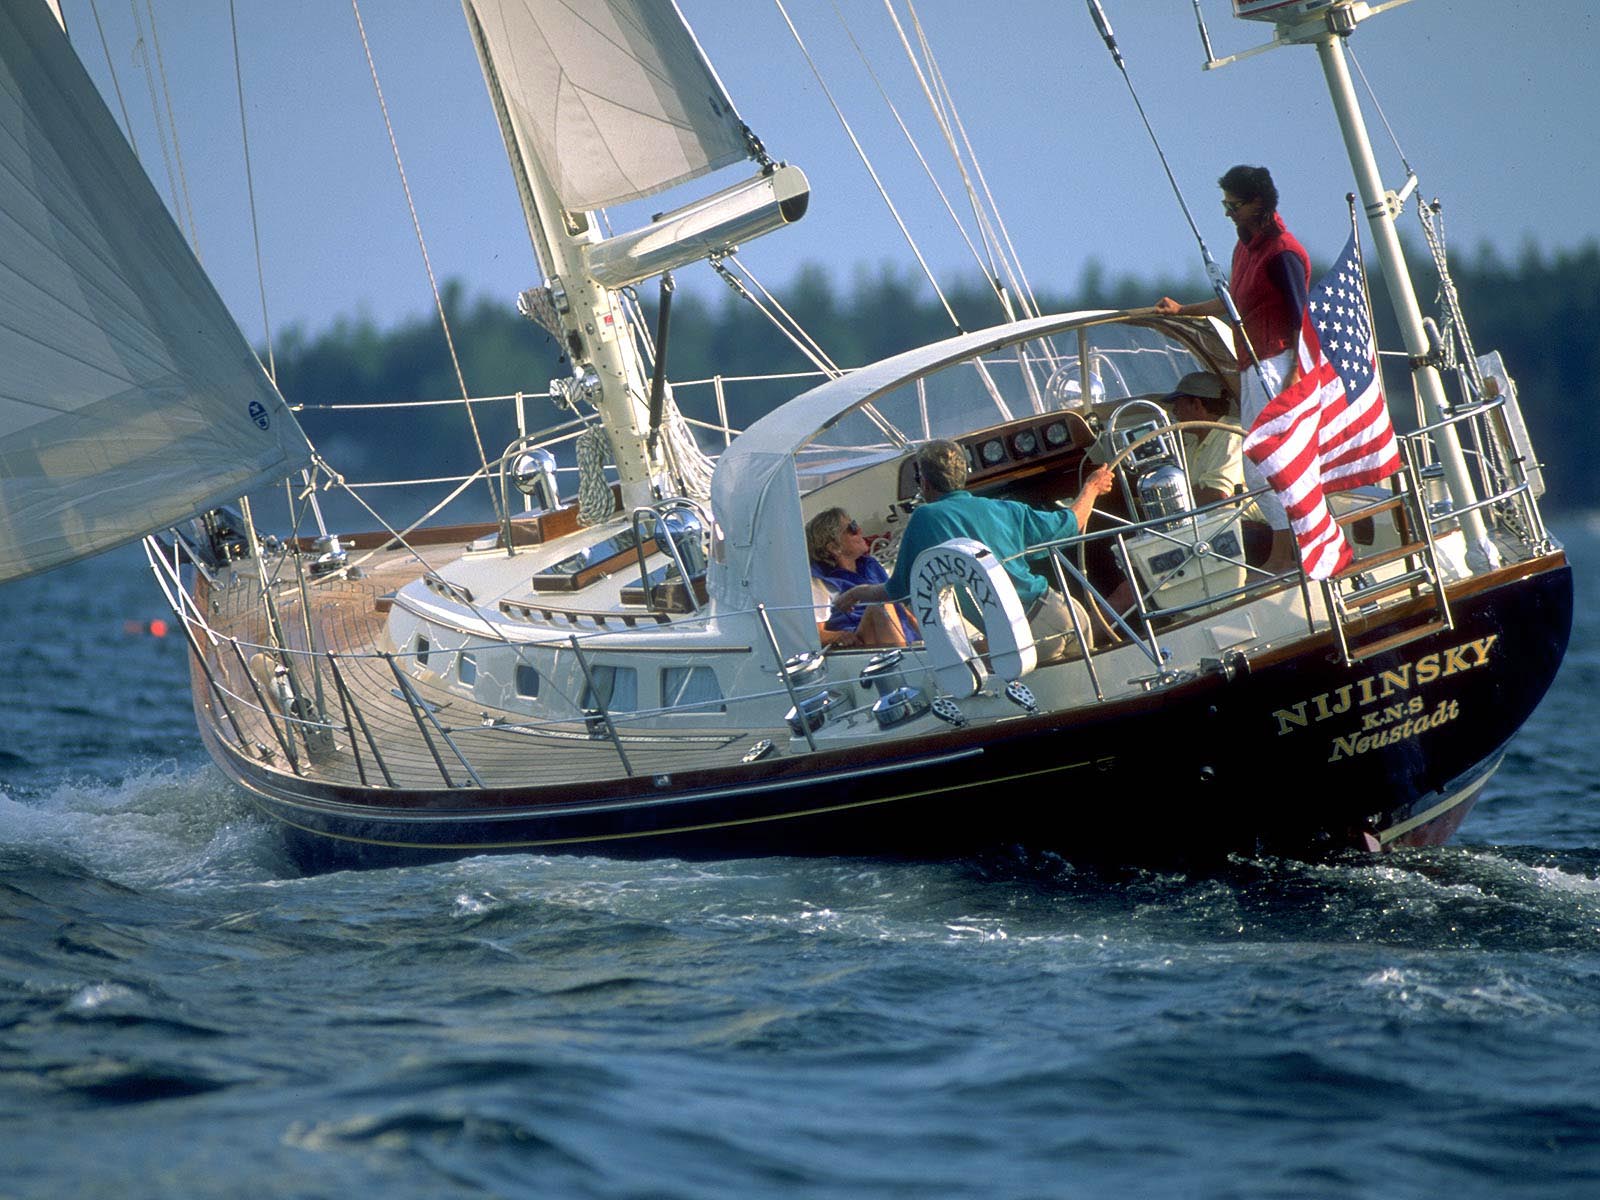 Download image Sailboat Wallpaper Sailing Boat PC Android iPhone and